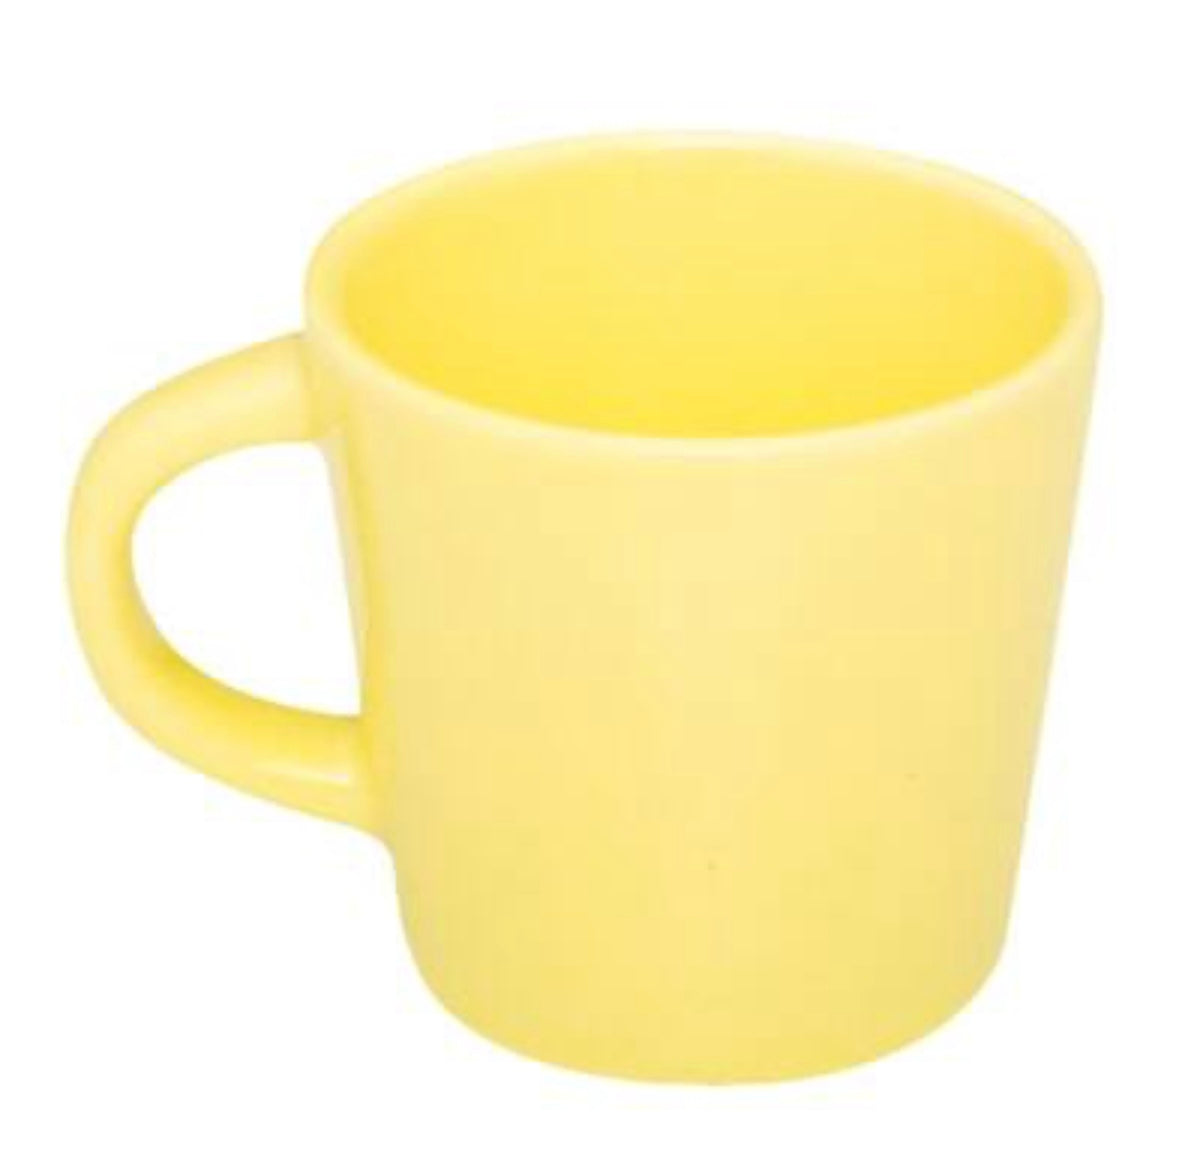 Vondels - Espresso Mok YOU GO GIRL lemon yellow 80ml - RUBY Conceptstore 